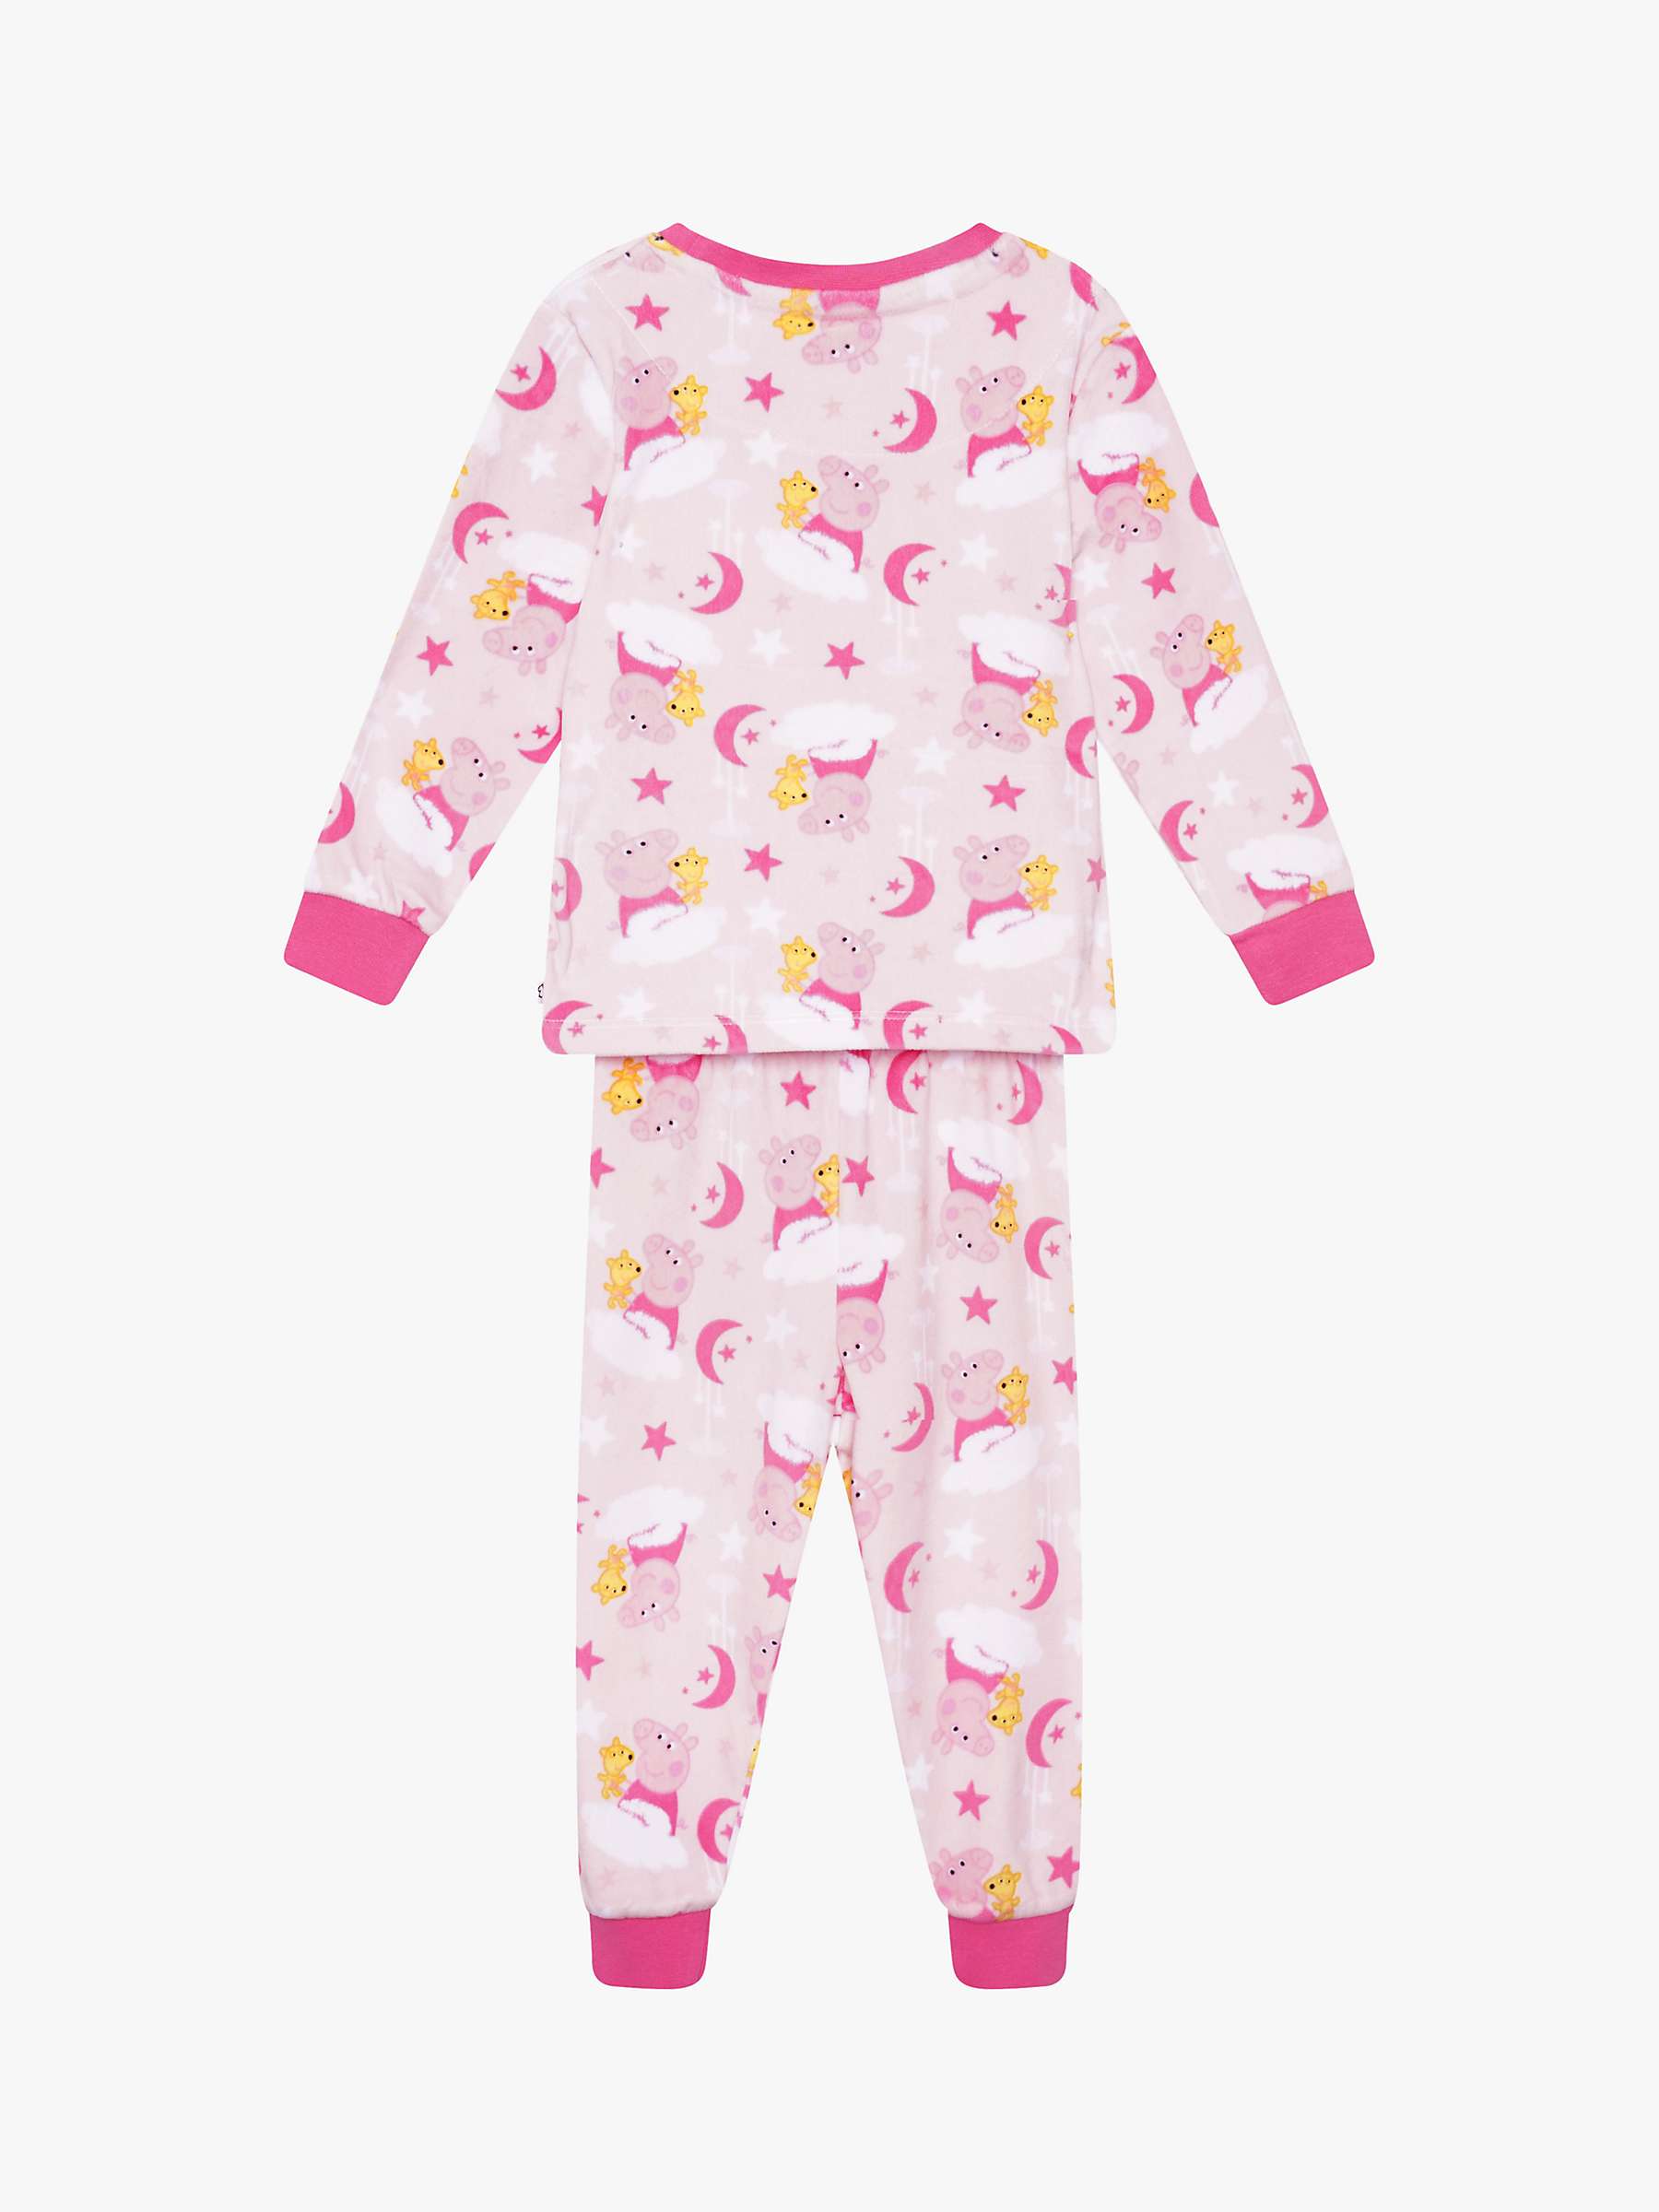 Buy Brand Threads Kids' Peppa Pig Fleece Pyjamas Set Online at johnlewis.com